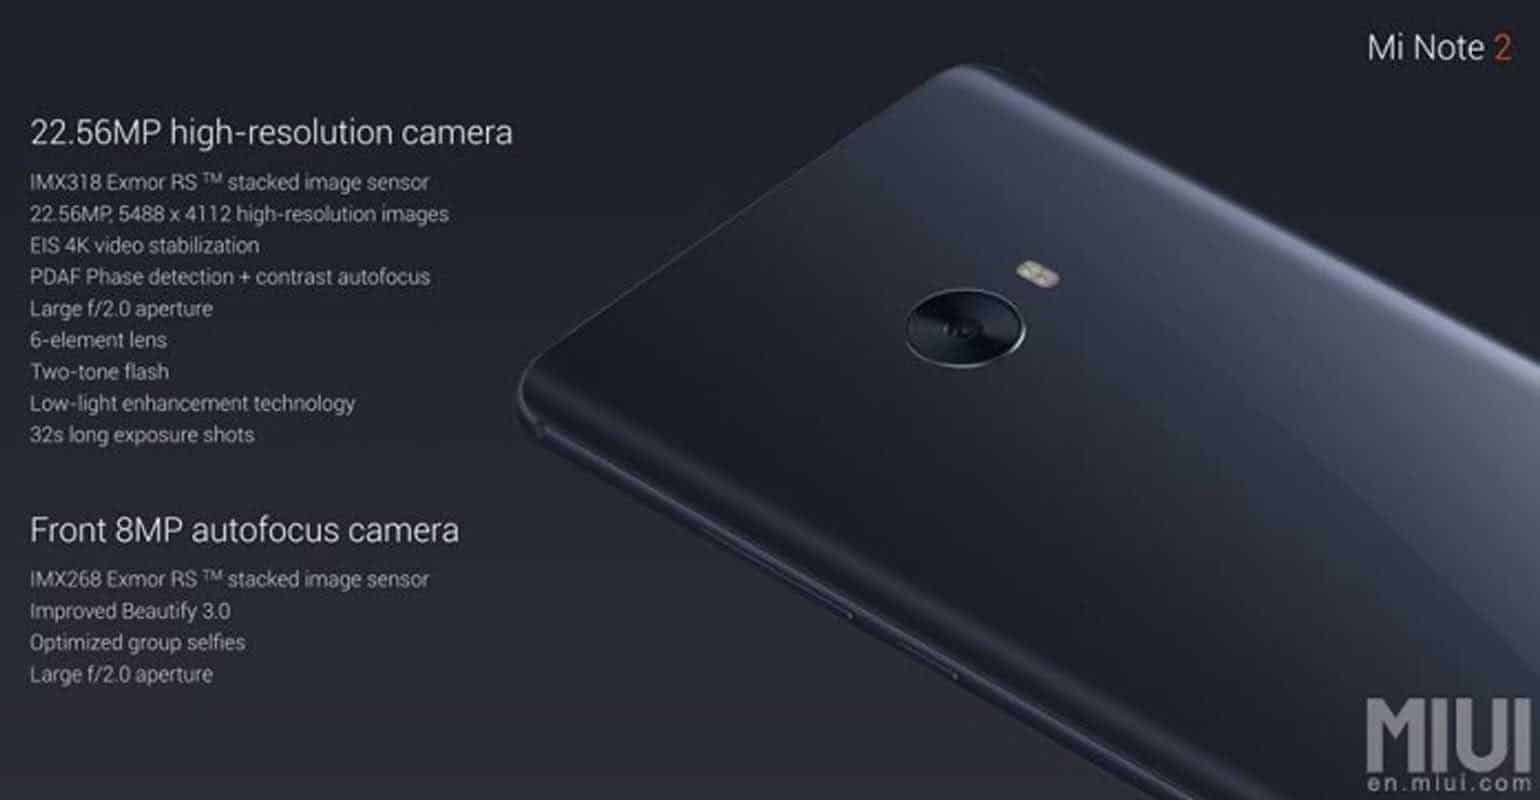 Xiaomi Mi Note 2 camera specificaties